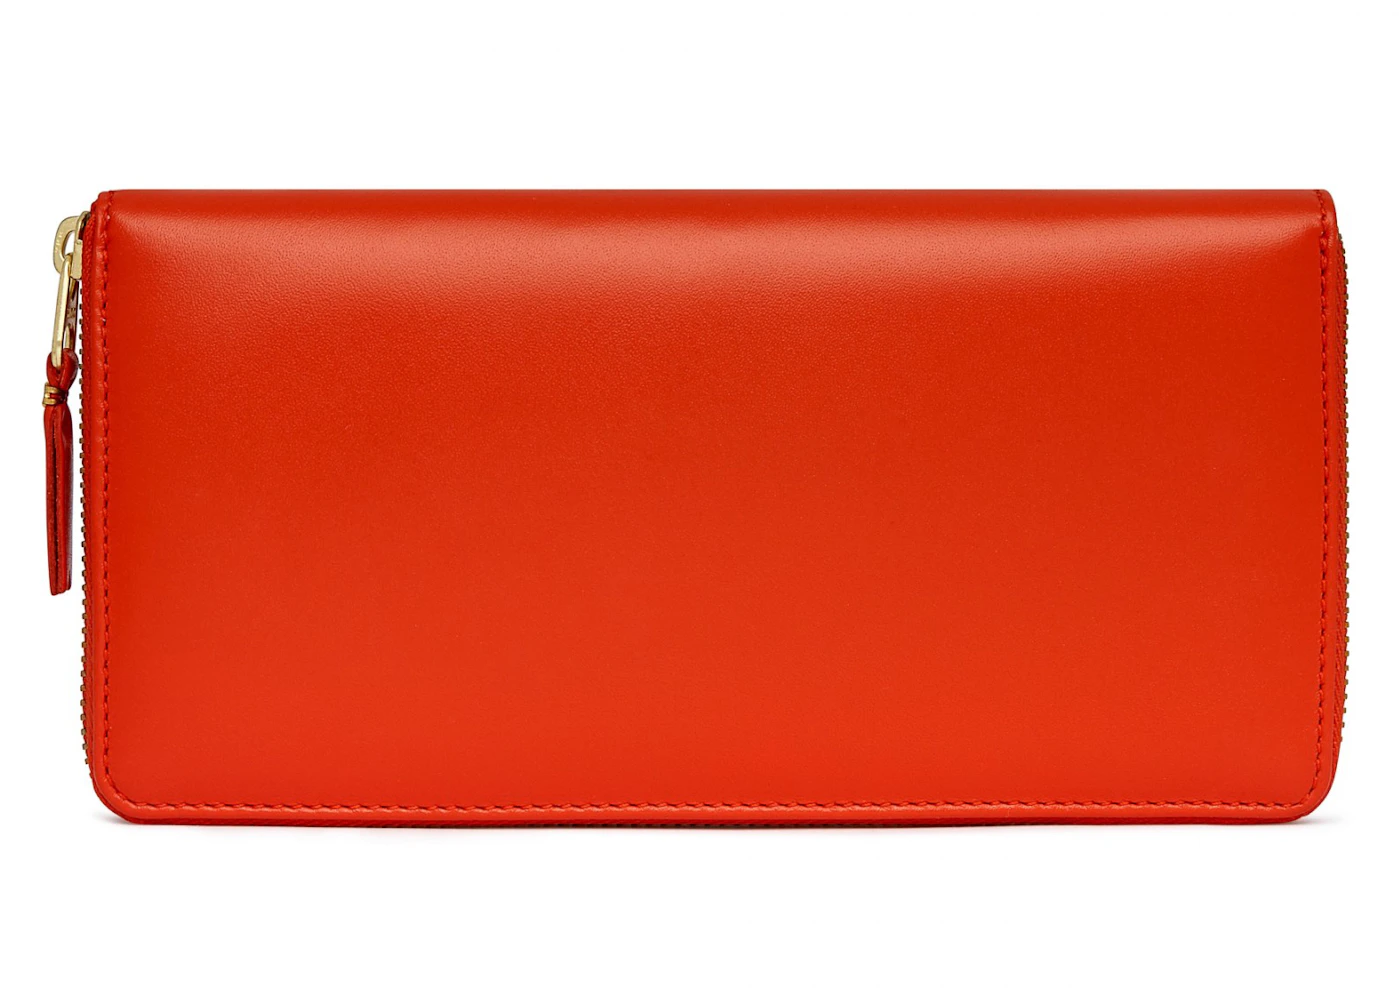 Comme des Garcons SA0110 Colour Plain Wallet Orange in Leather with ...